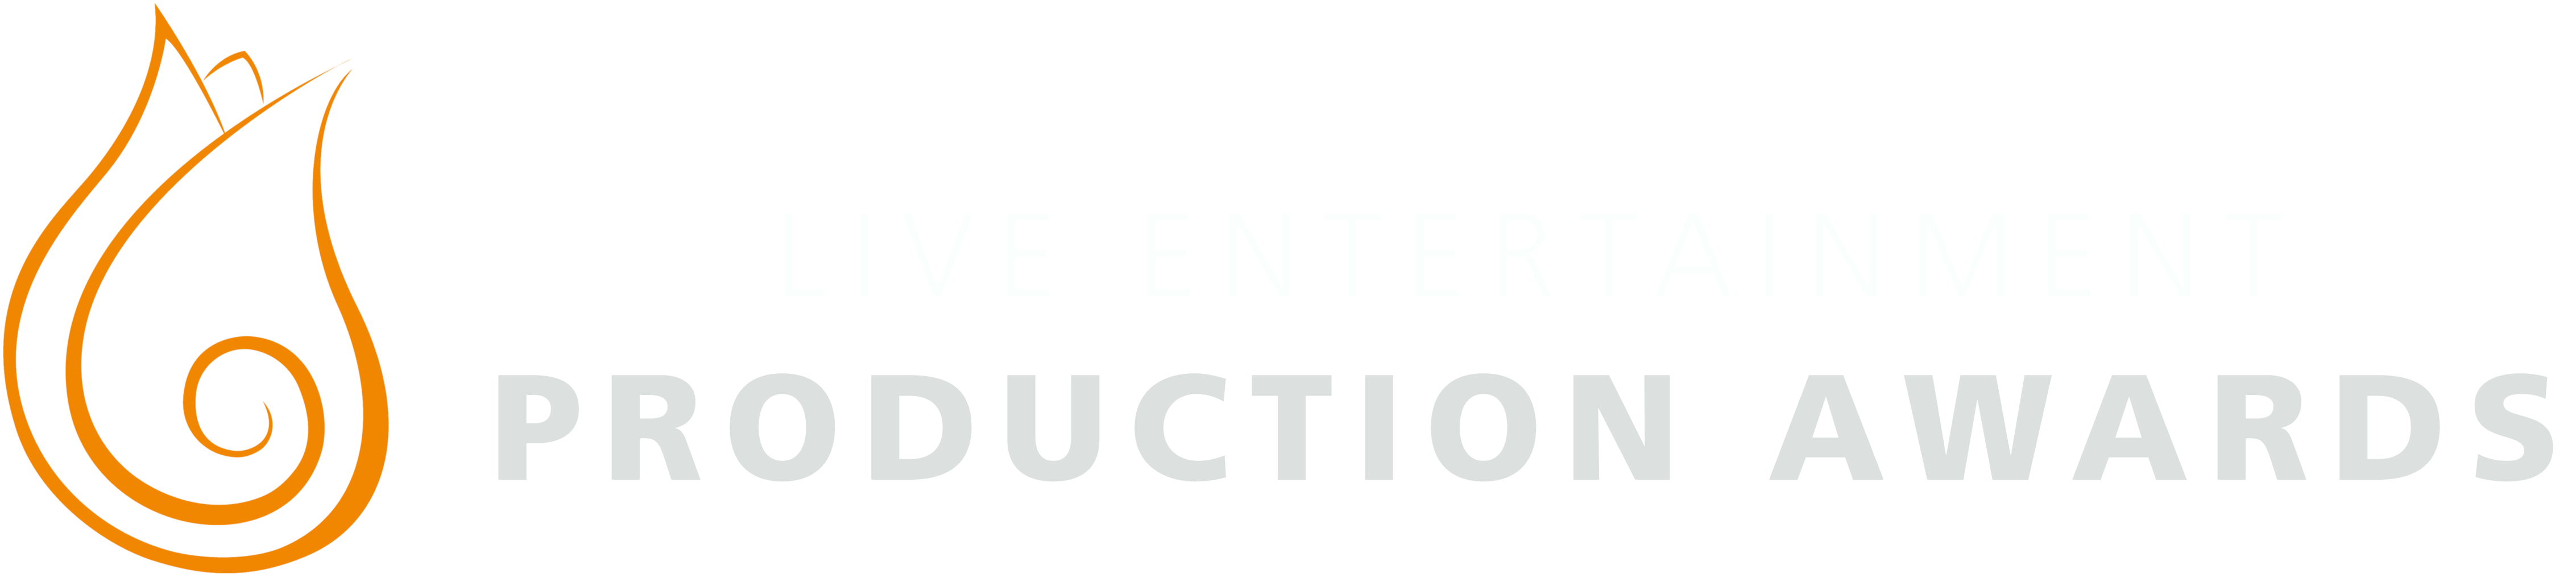 Live Entertainment Production Awards